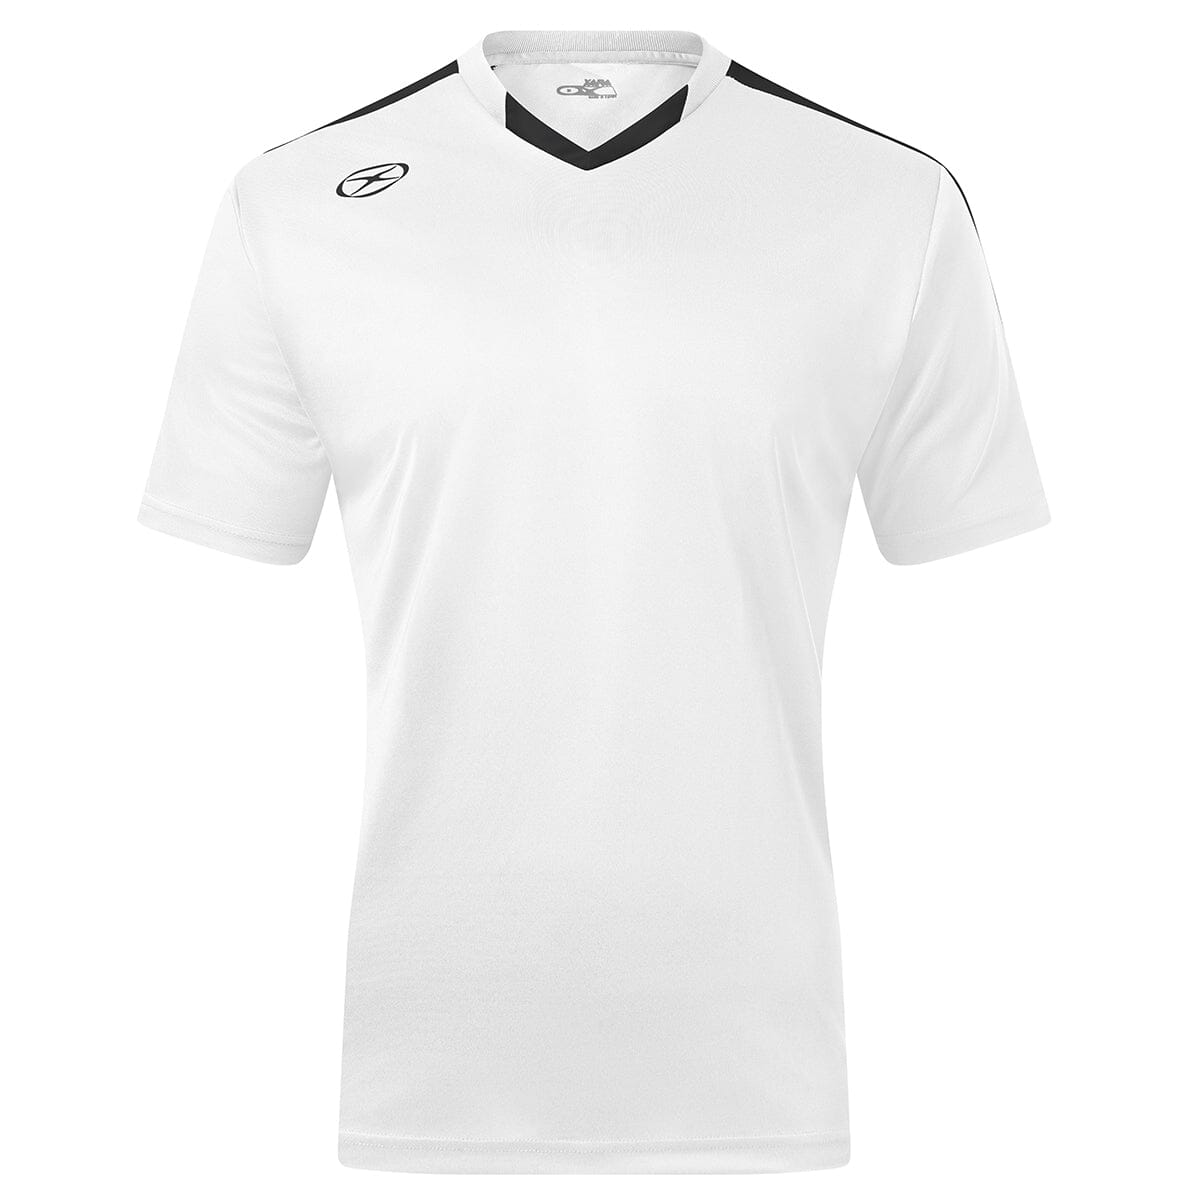 Britannia Jersey - Away Colors - Male Shirt Xara Soccer 